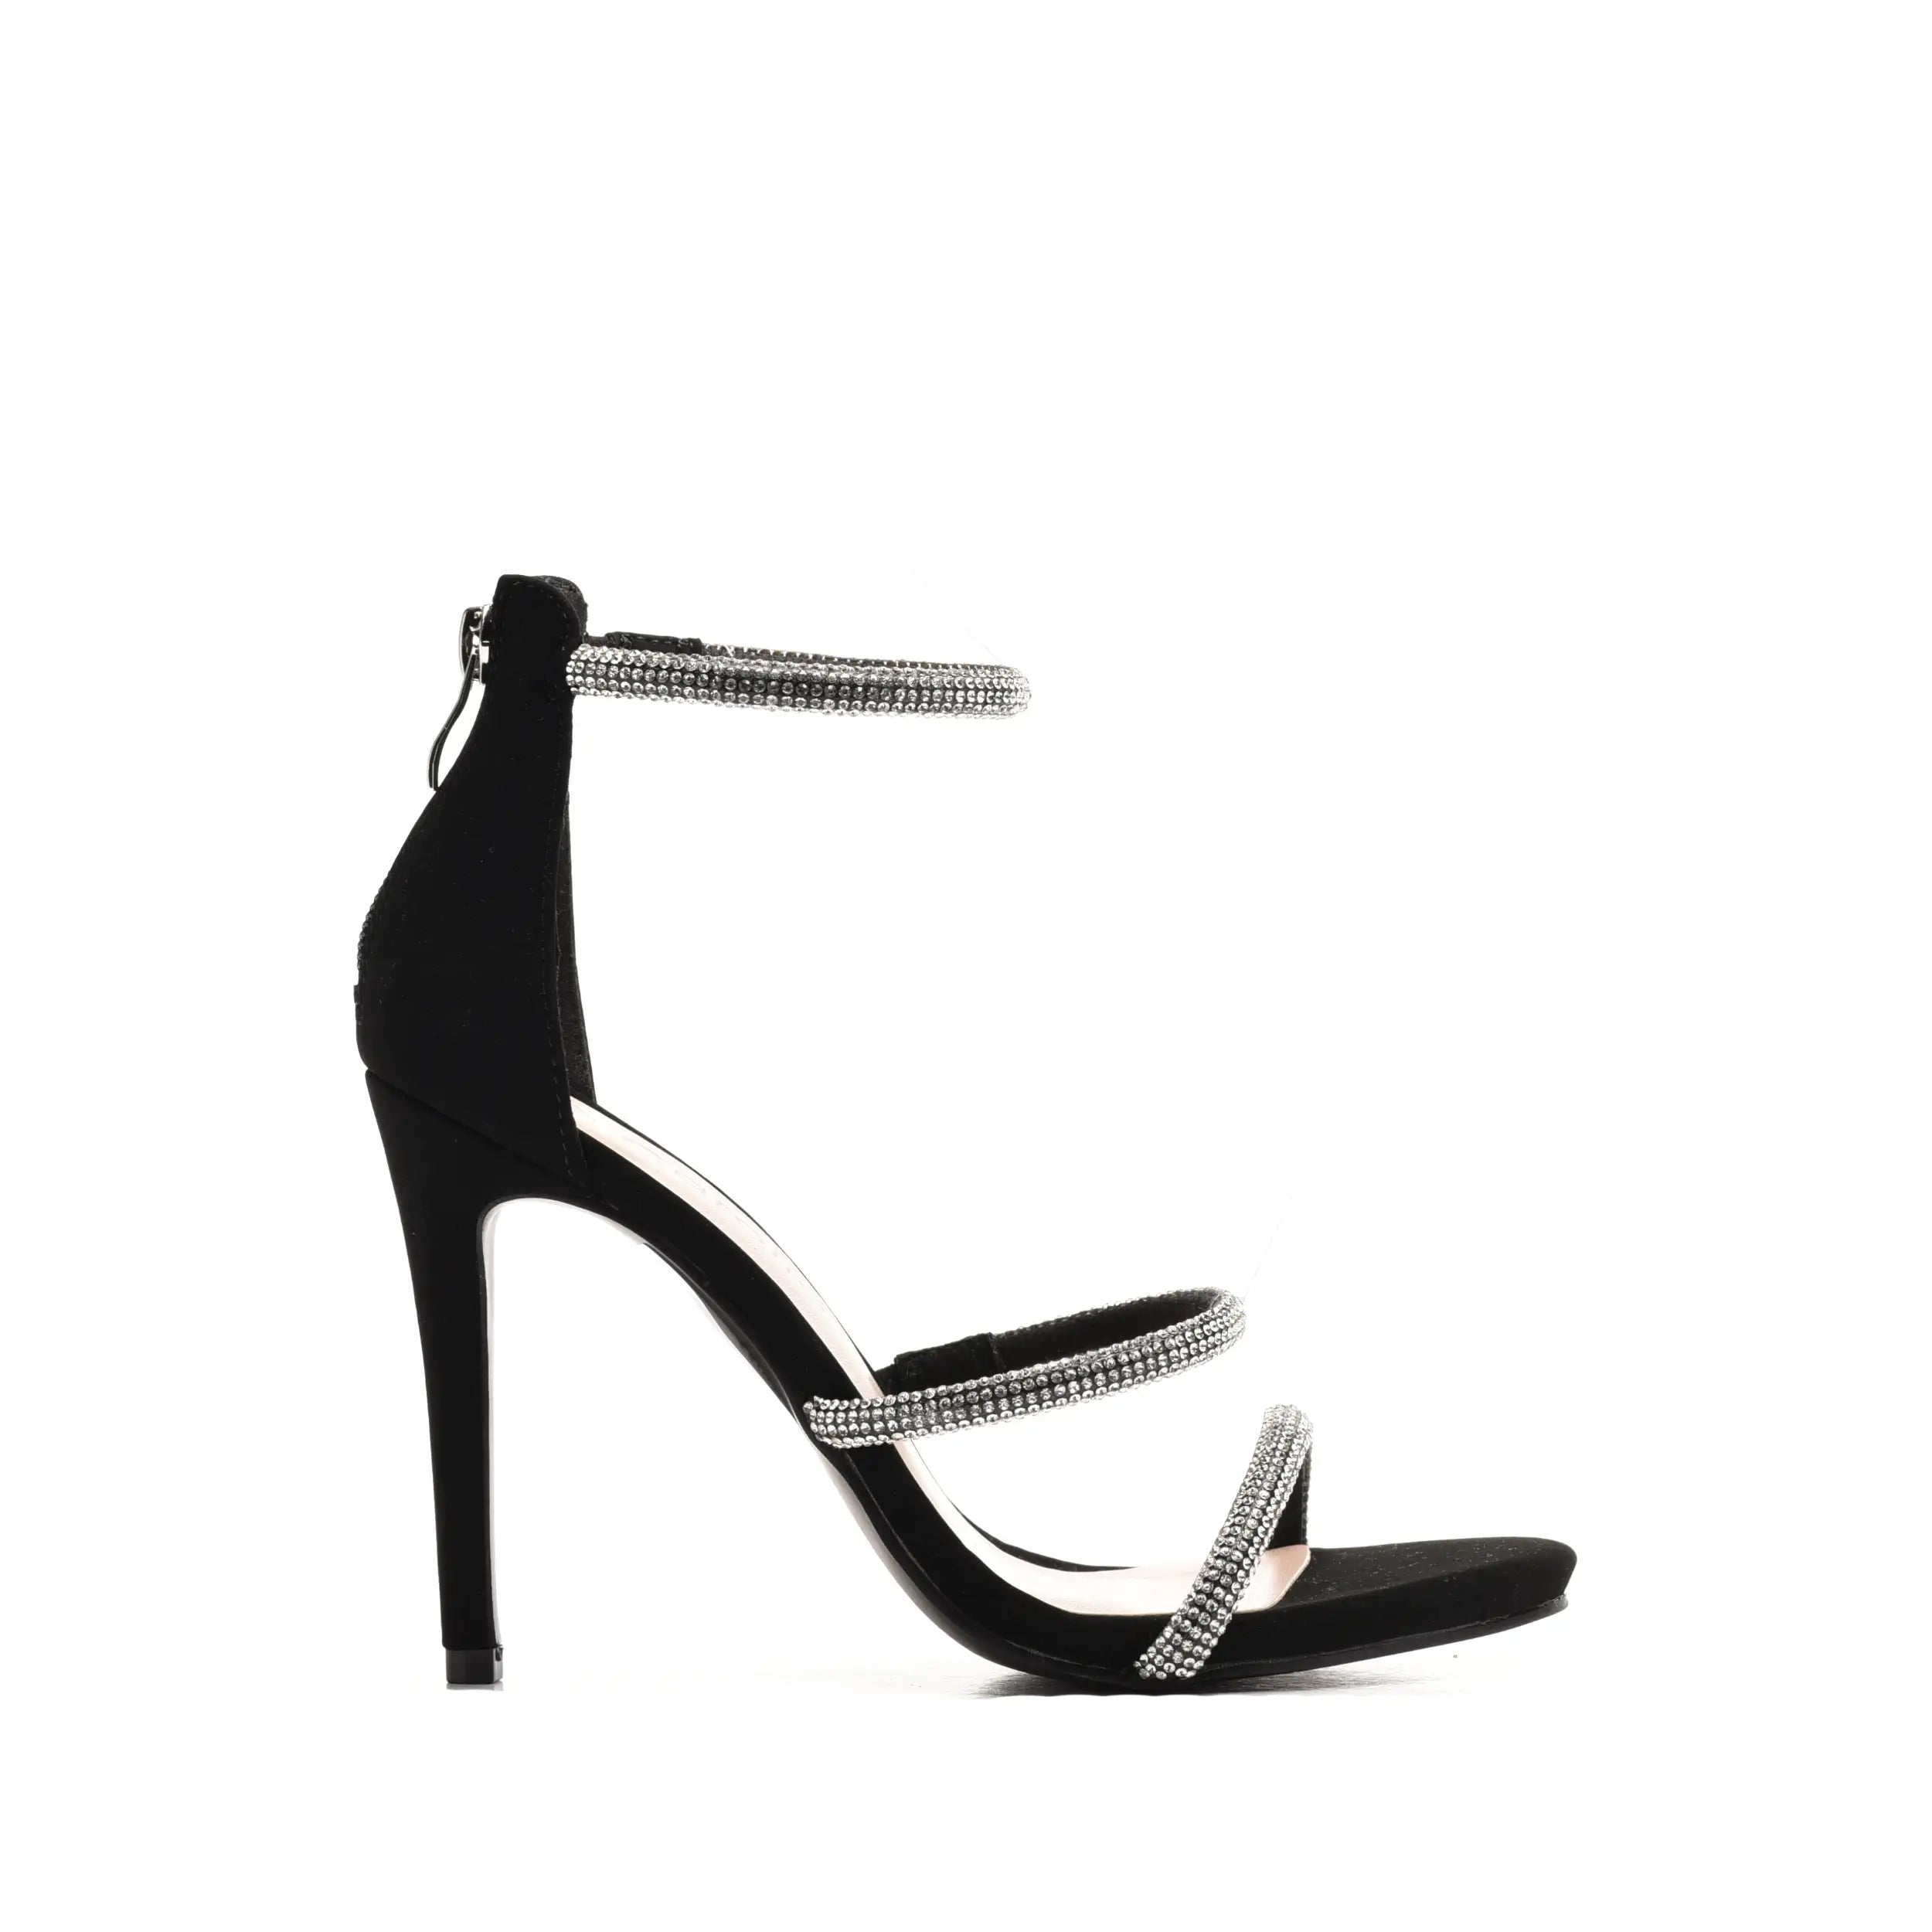 Sandale Elegante Dama cu Toc Inalt si Barete Stralucitoare, Negre